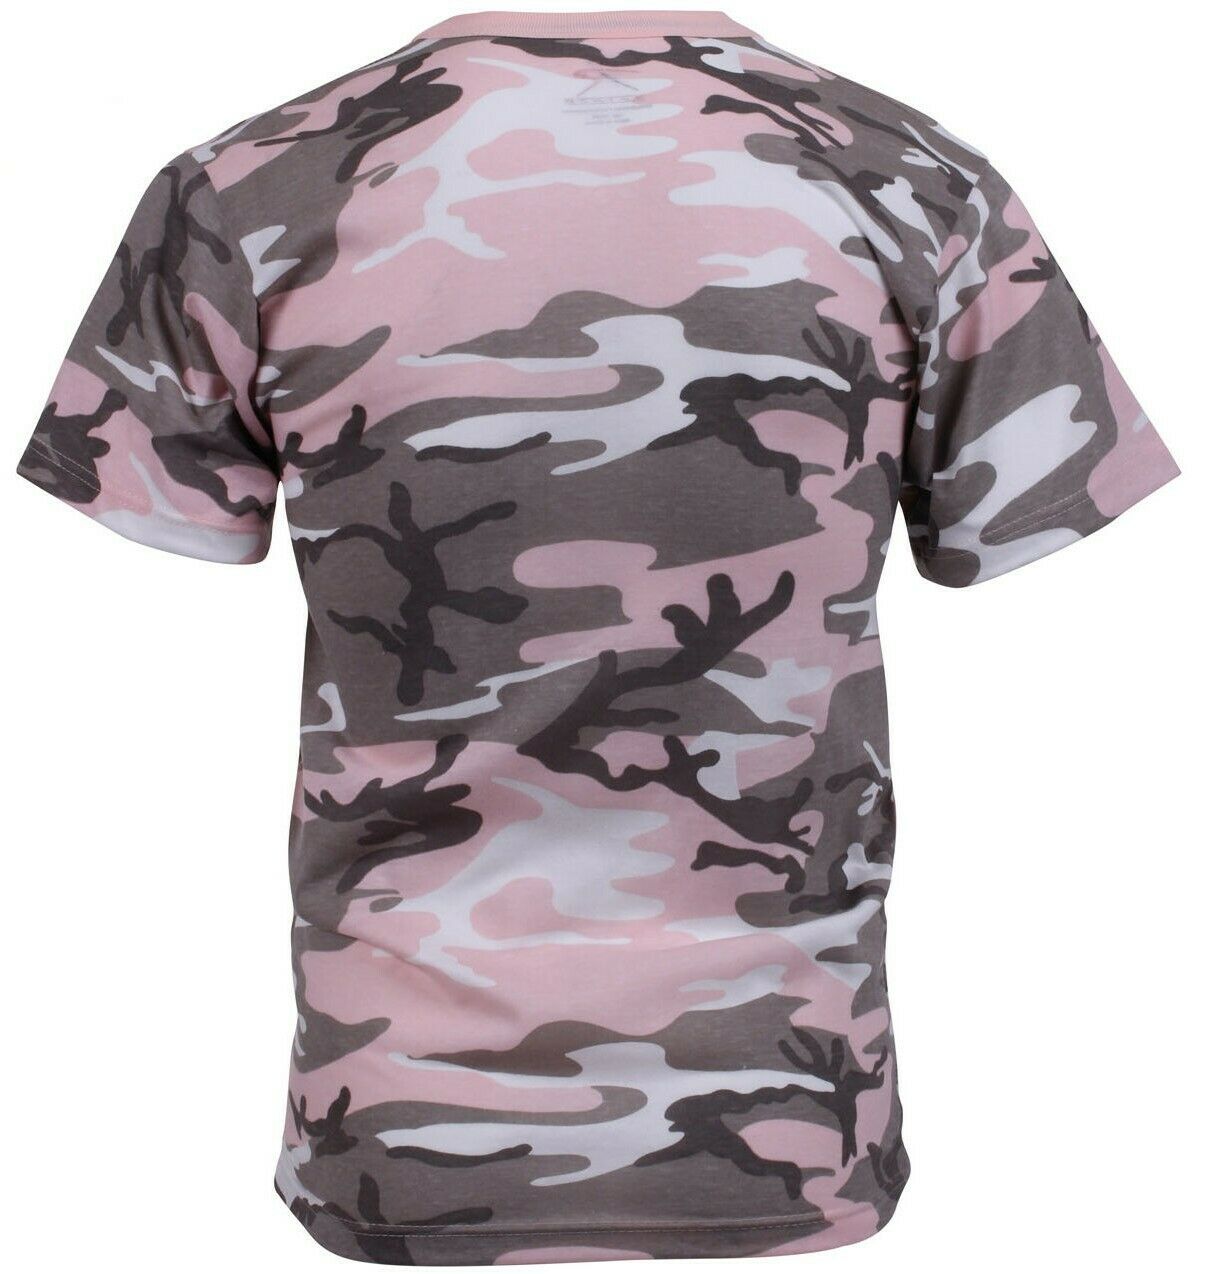 Rothco Color Camo T-shirts - Subdued Pink Camo